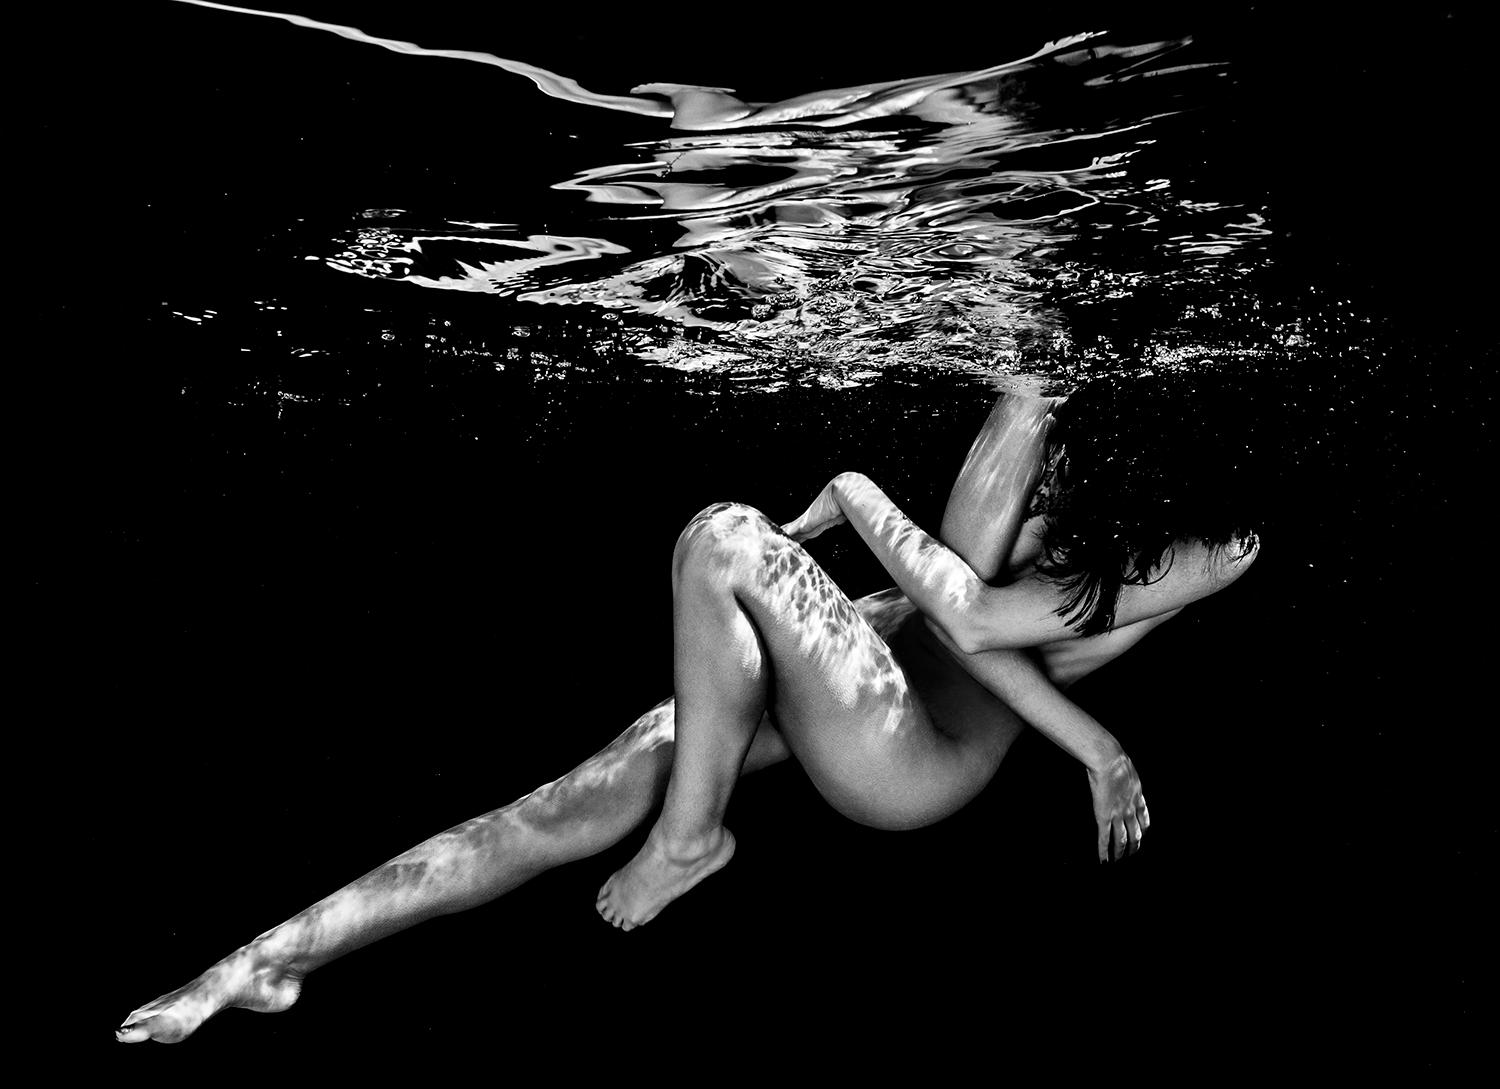 Night Flight - underwater black & white nude photograph - print on paper 17